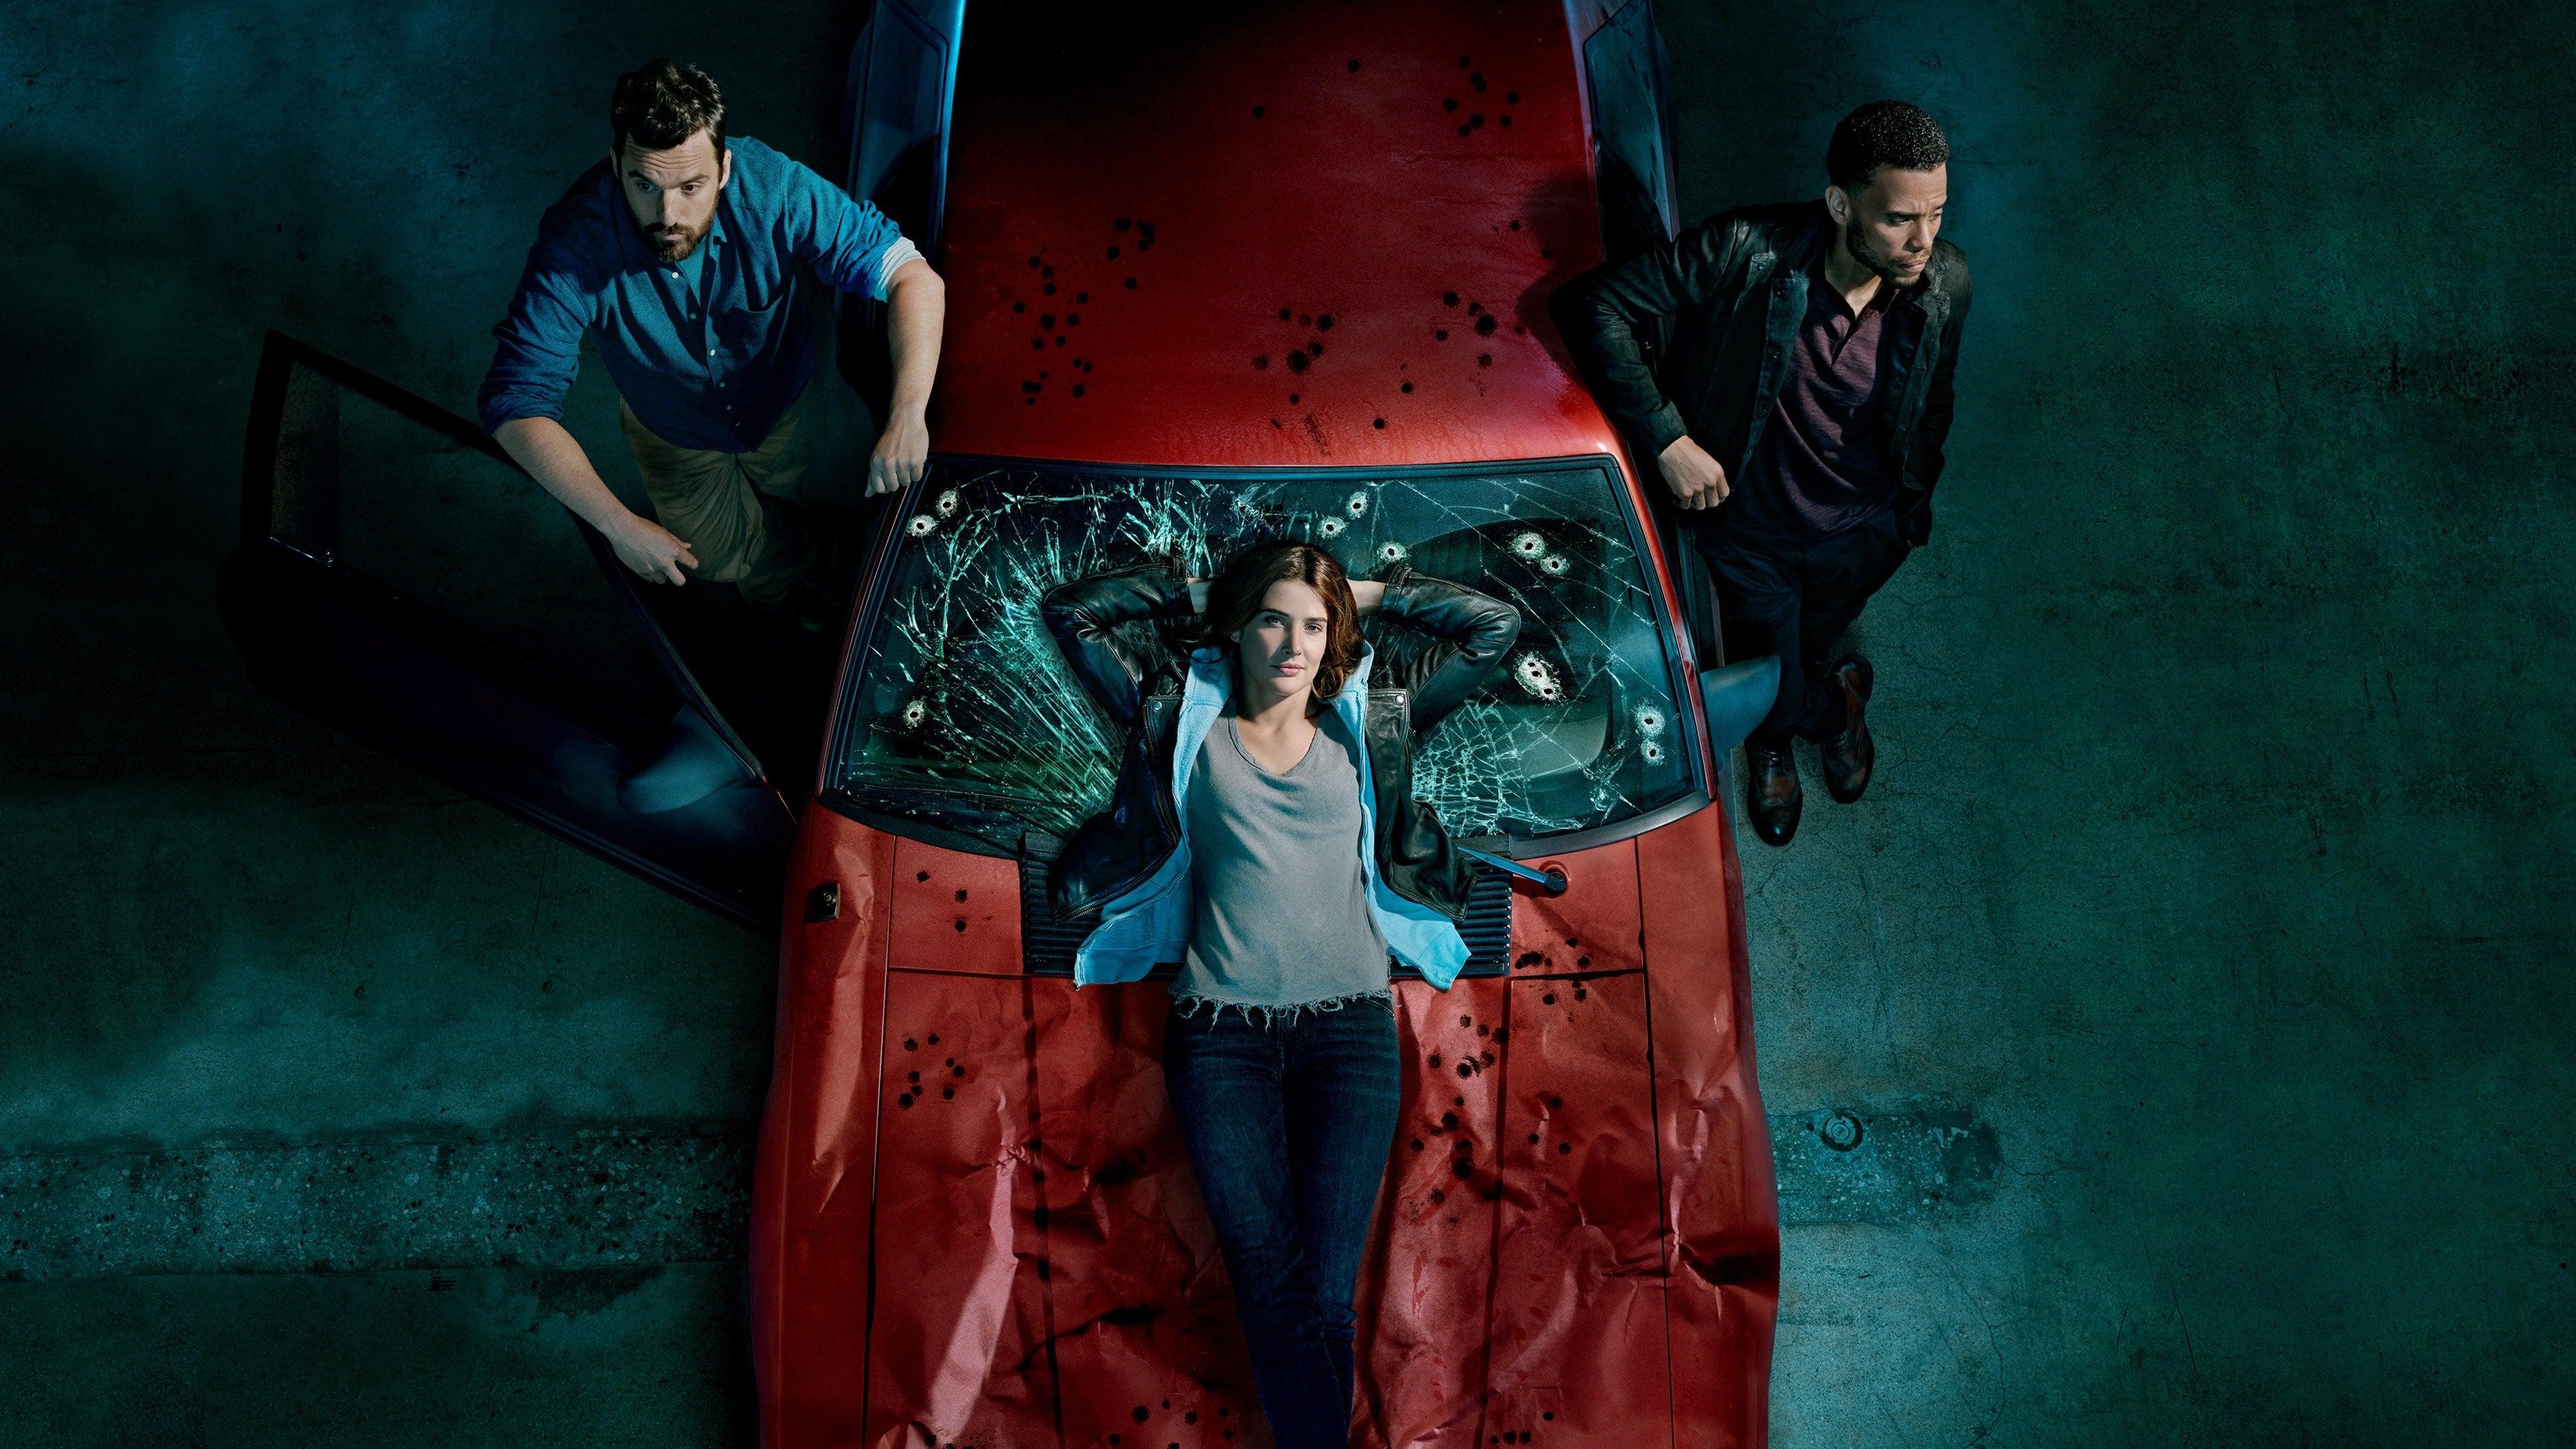 Stumptown' Canceled: No Season 2 Of Cobie Smulders Series